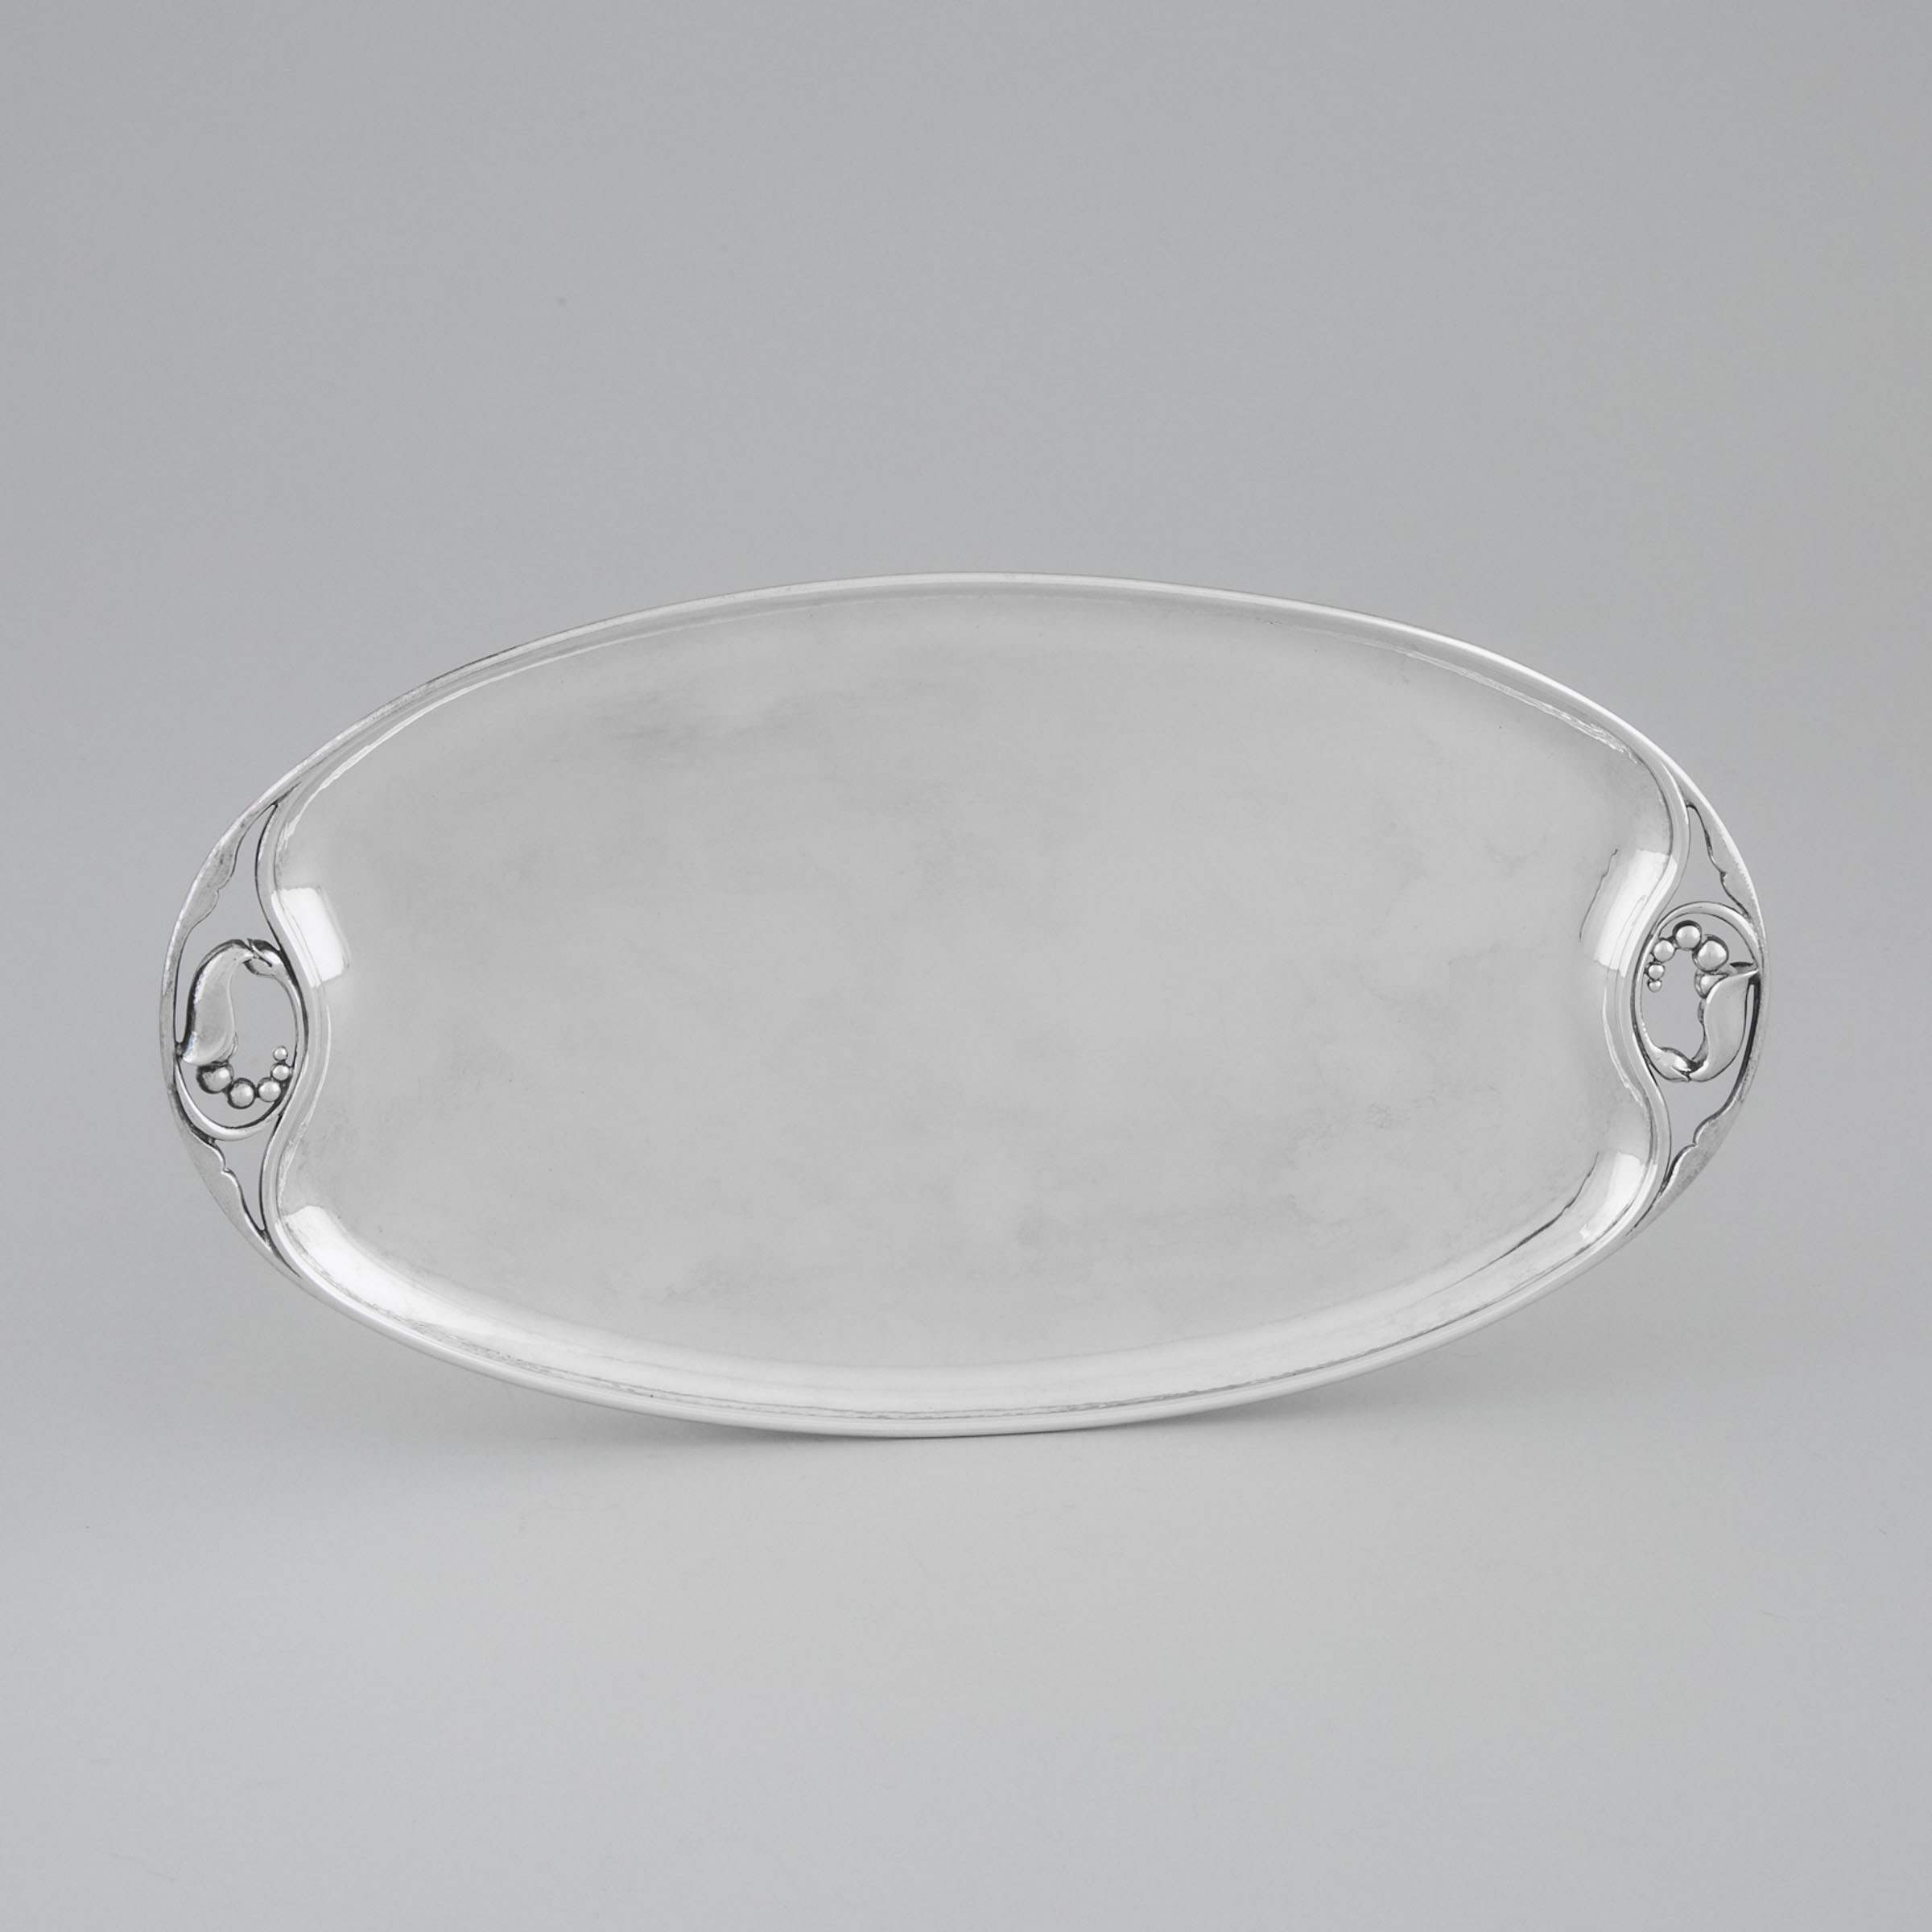 Danish Silver Small Oval Tray  3b6d30